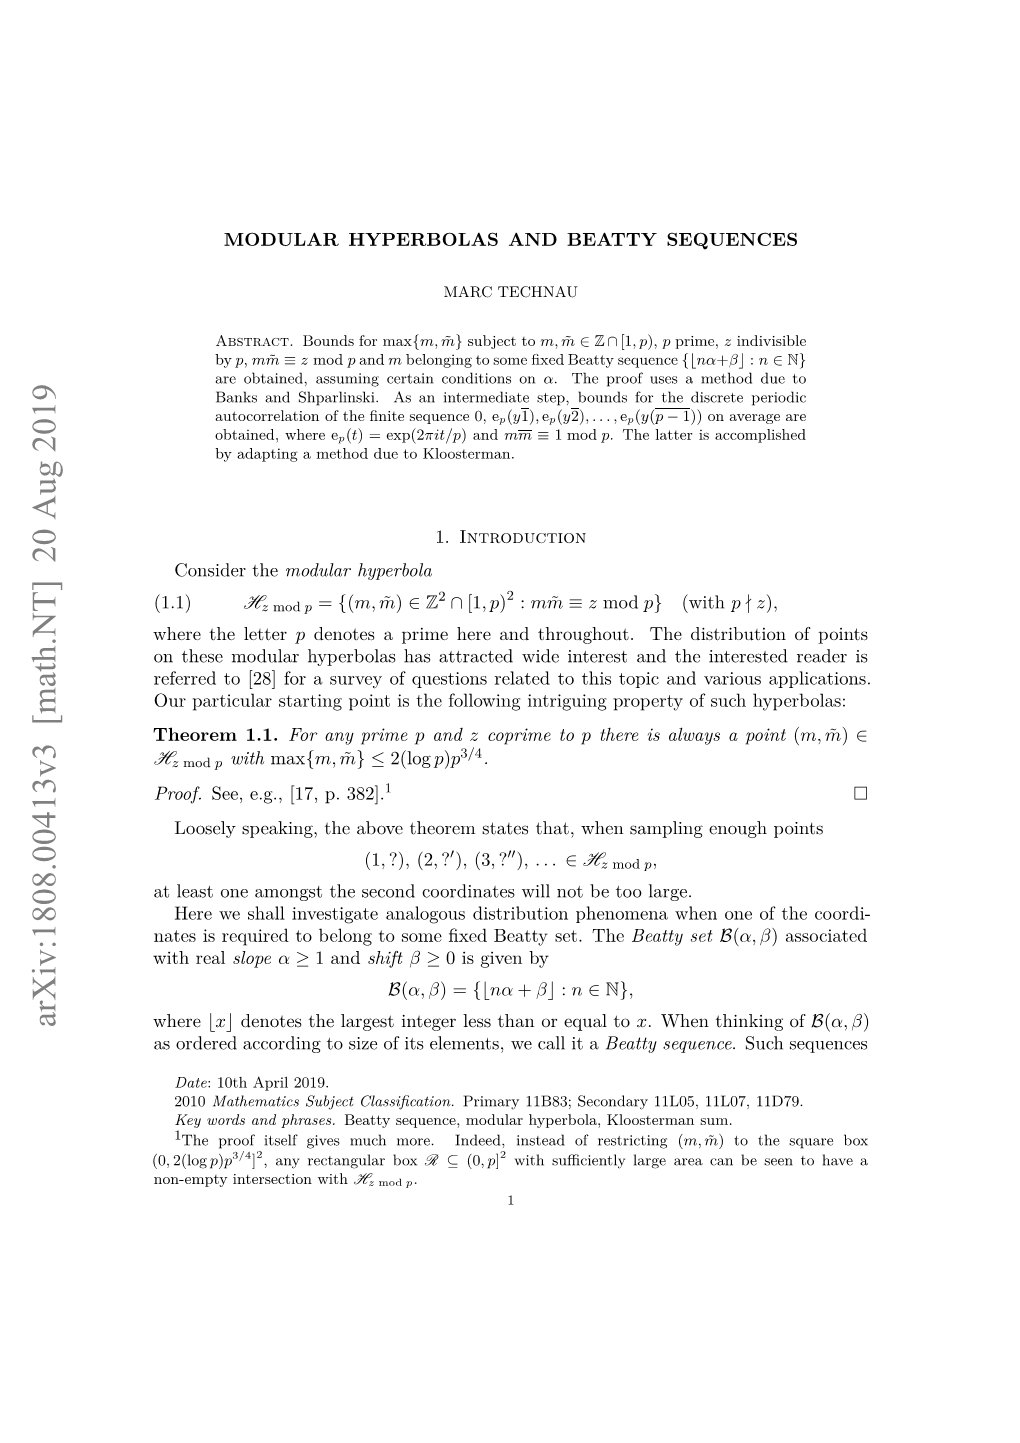 Modular Hyperbolas and Beatty Sequences